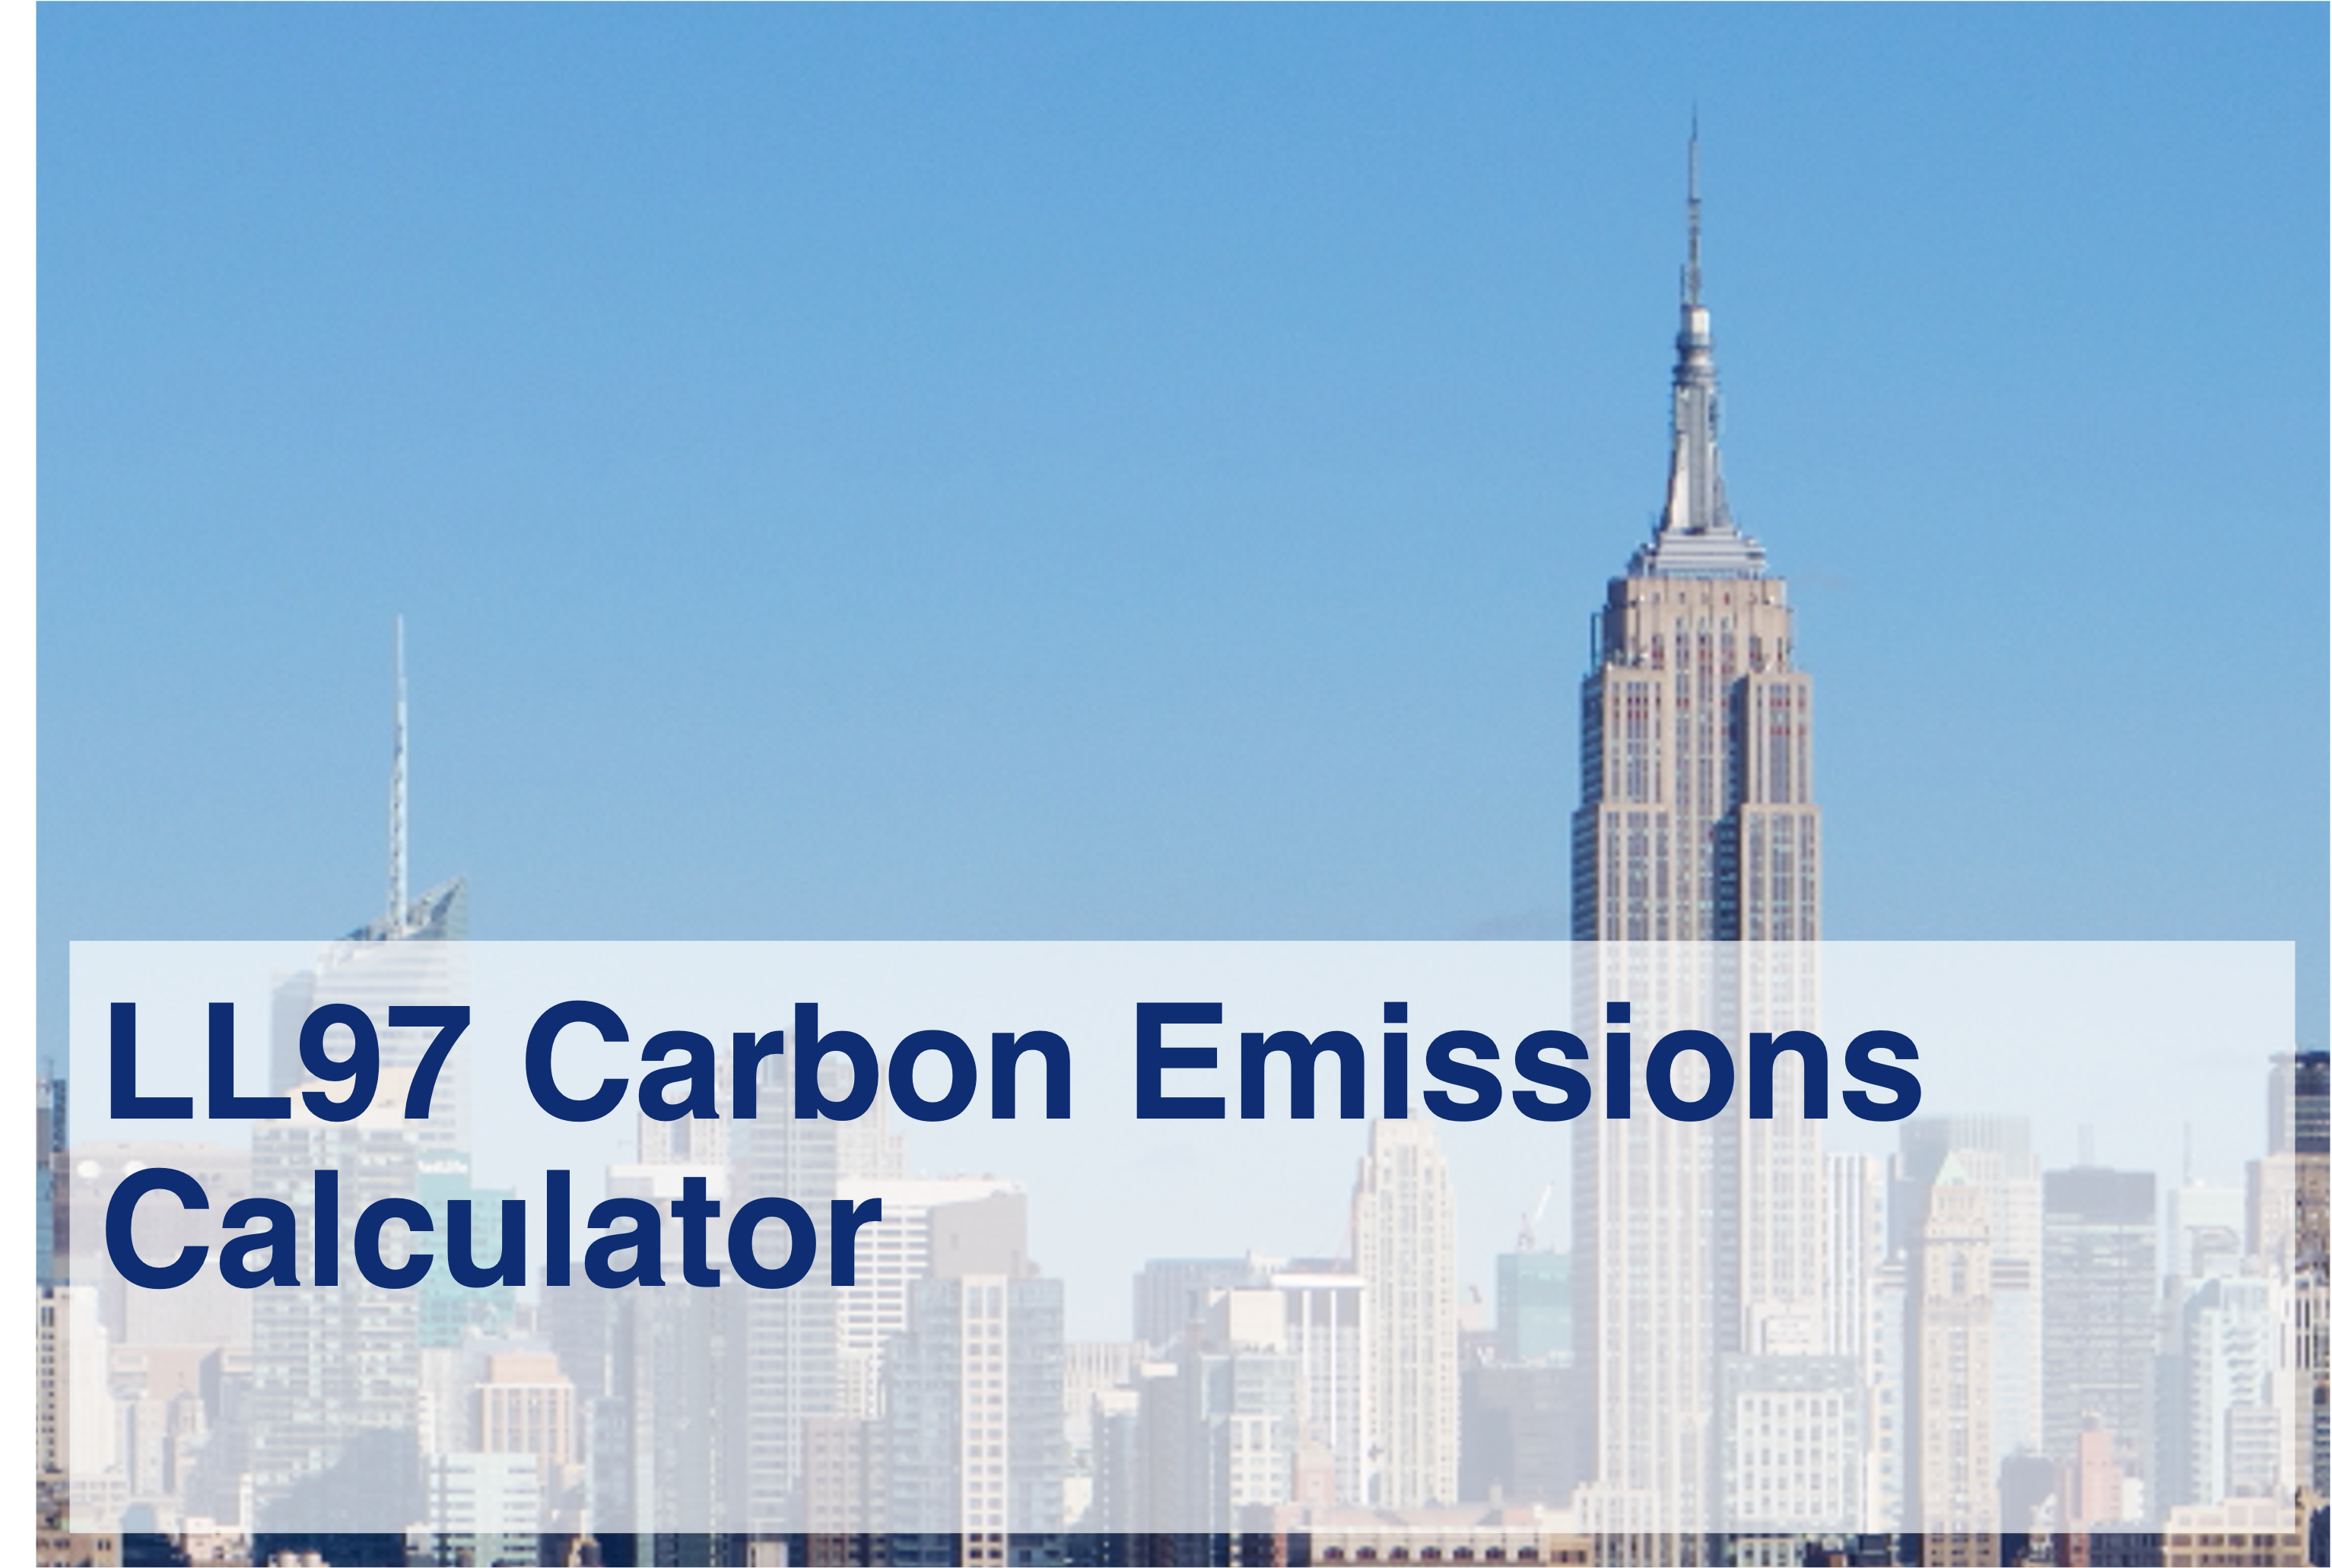 LL97 Carbon Emissions Calculator